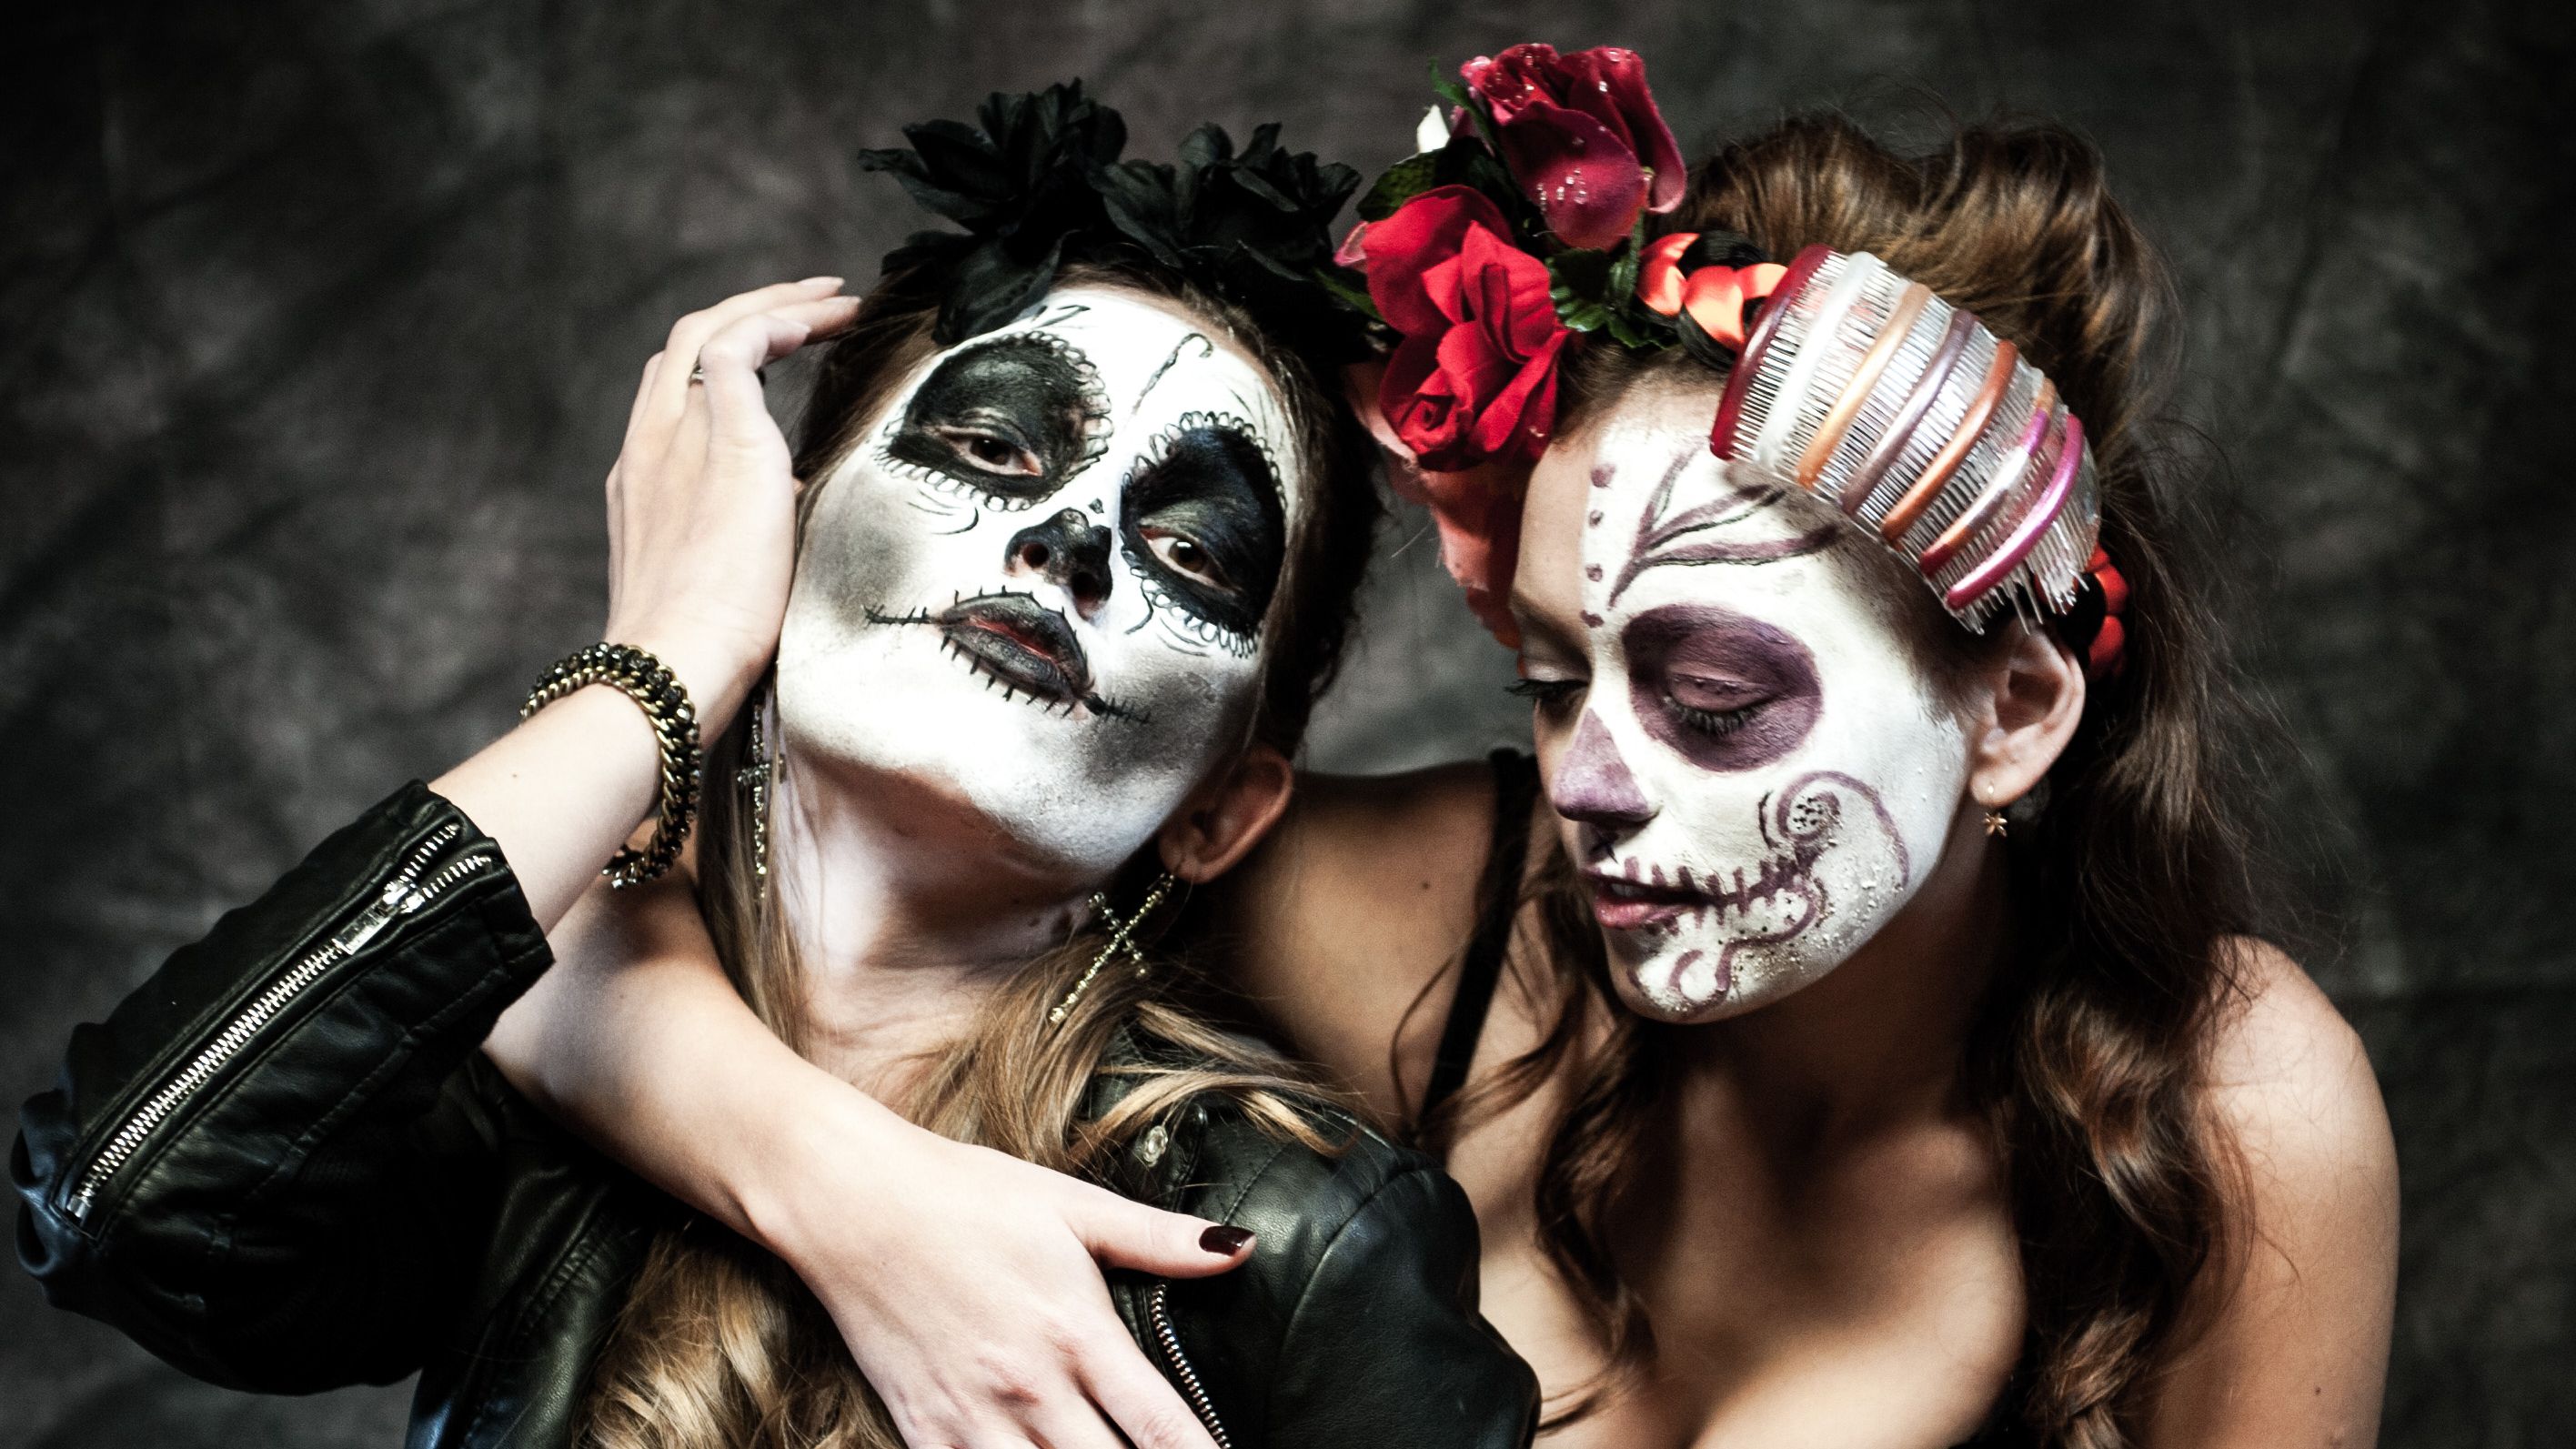 Maquillaje de Halloween paso a paso: 10 ideas terroríficas